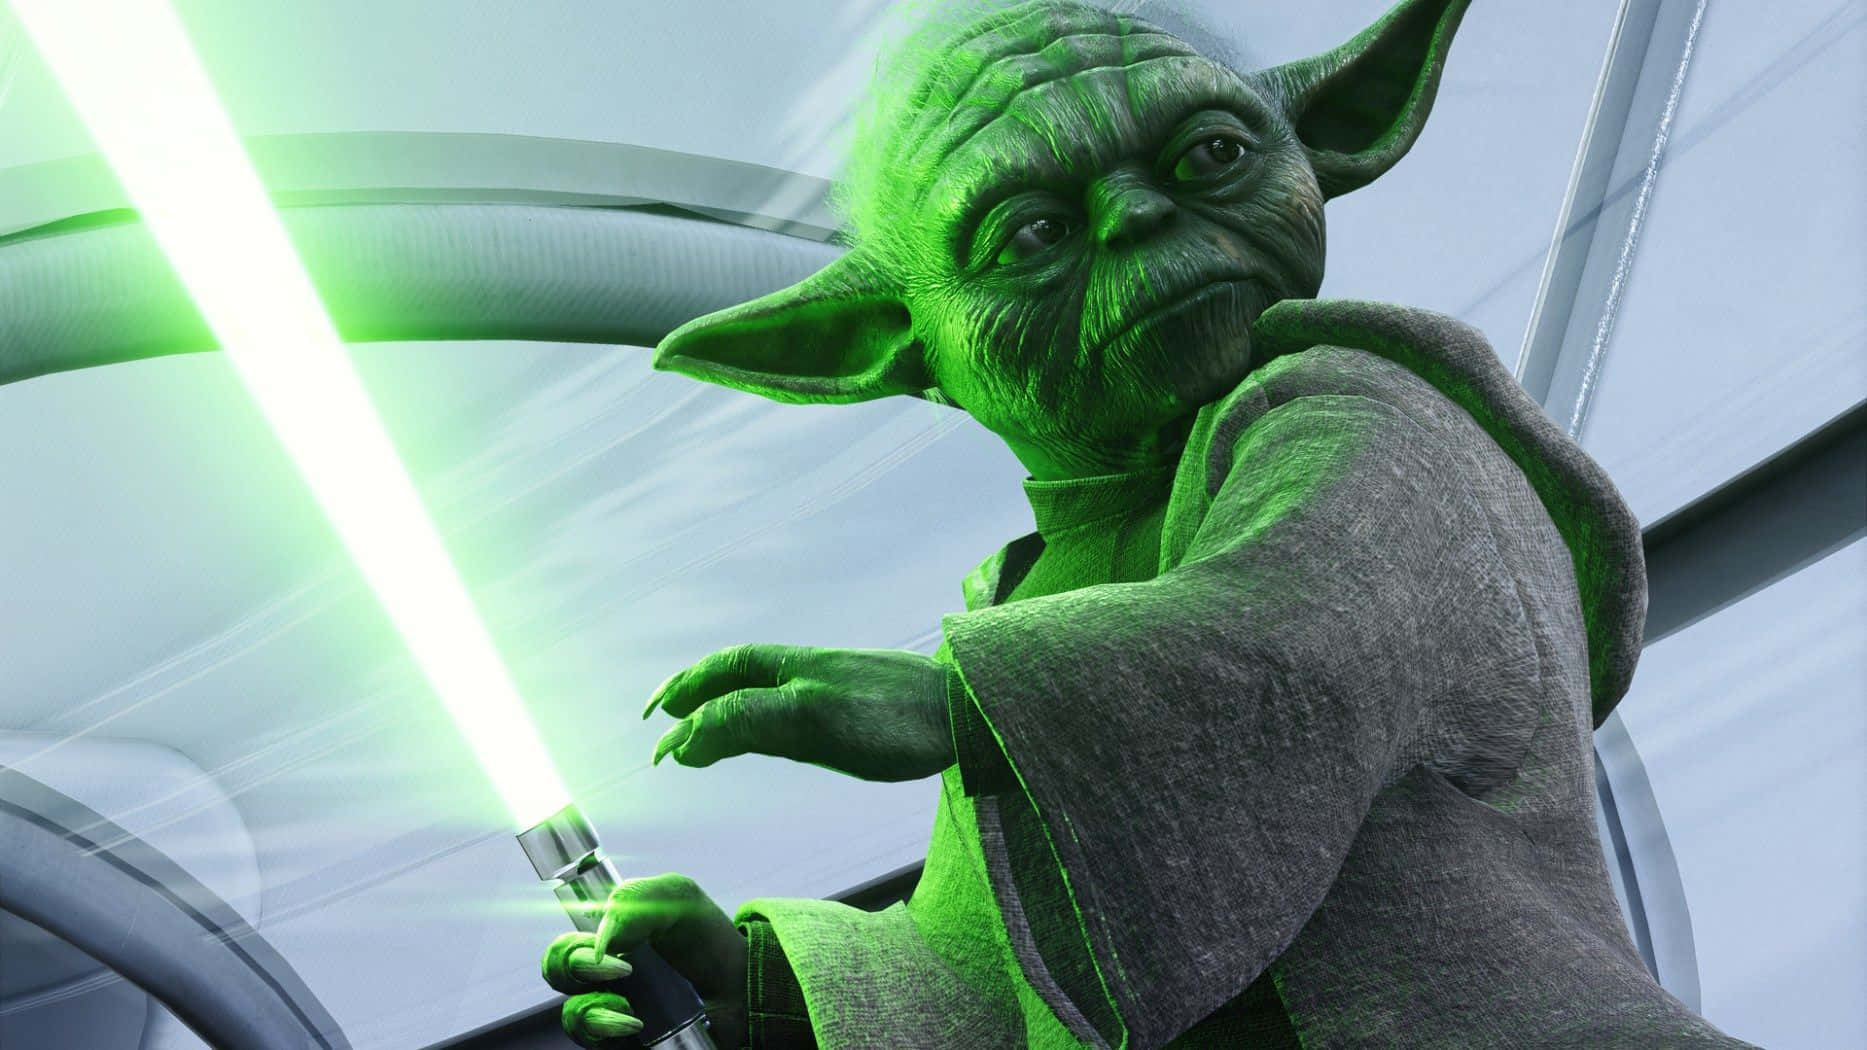 Master Yoda, the legendary Jedi